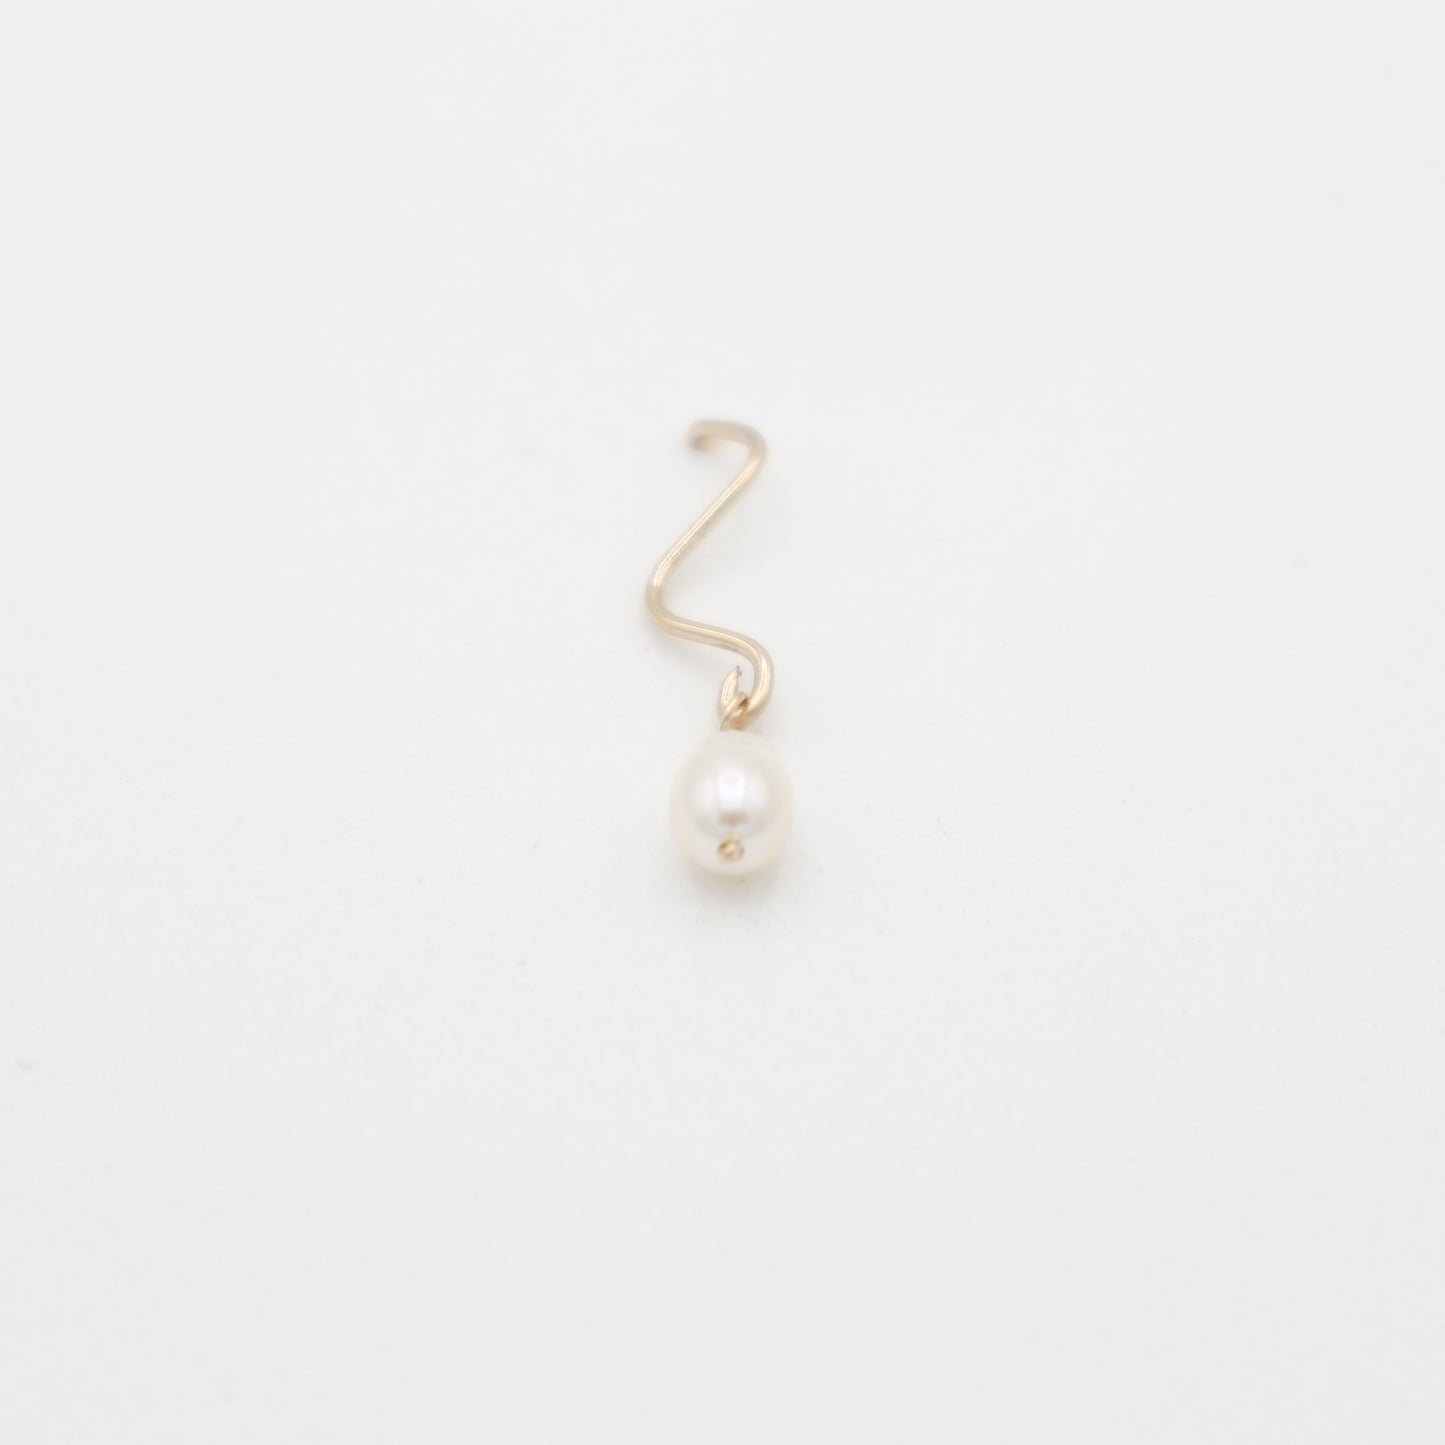 Roop Jewelry twinkle earrings in squiggly pearl. Handmade jewelry in Oakland, Ca.